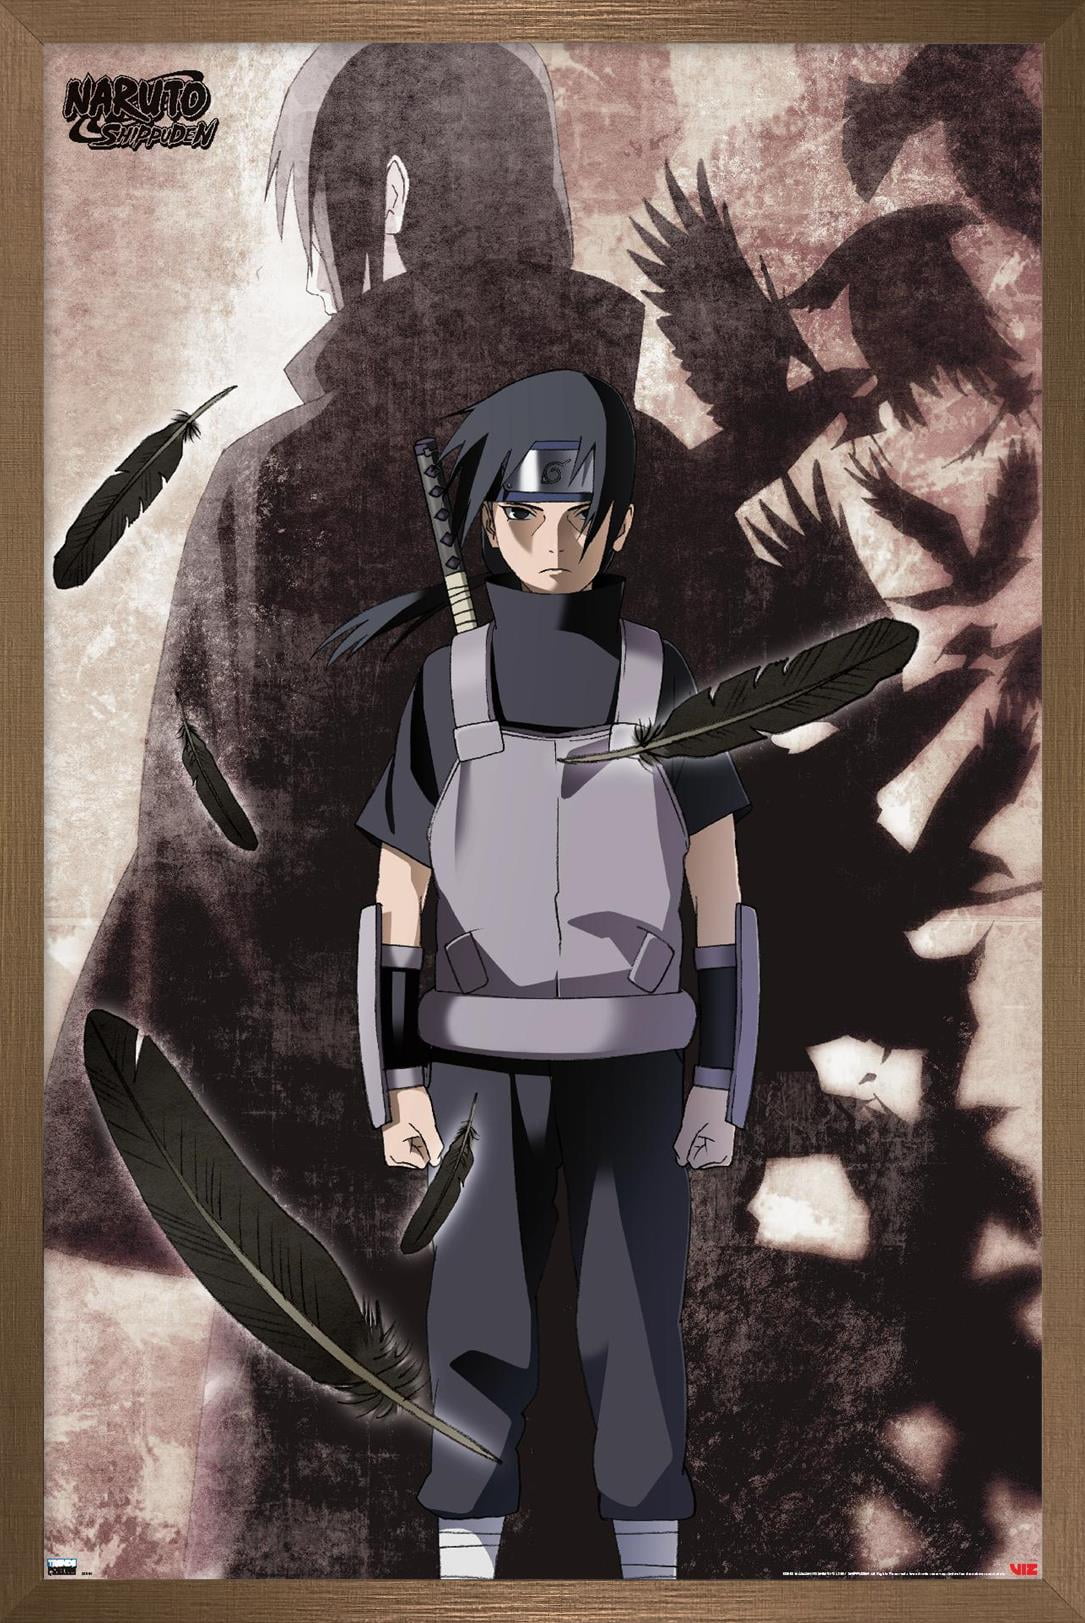 Naruto Shippuden - Itachi Uchiha Wall Poster, 22.375 x 34 Framed